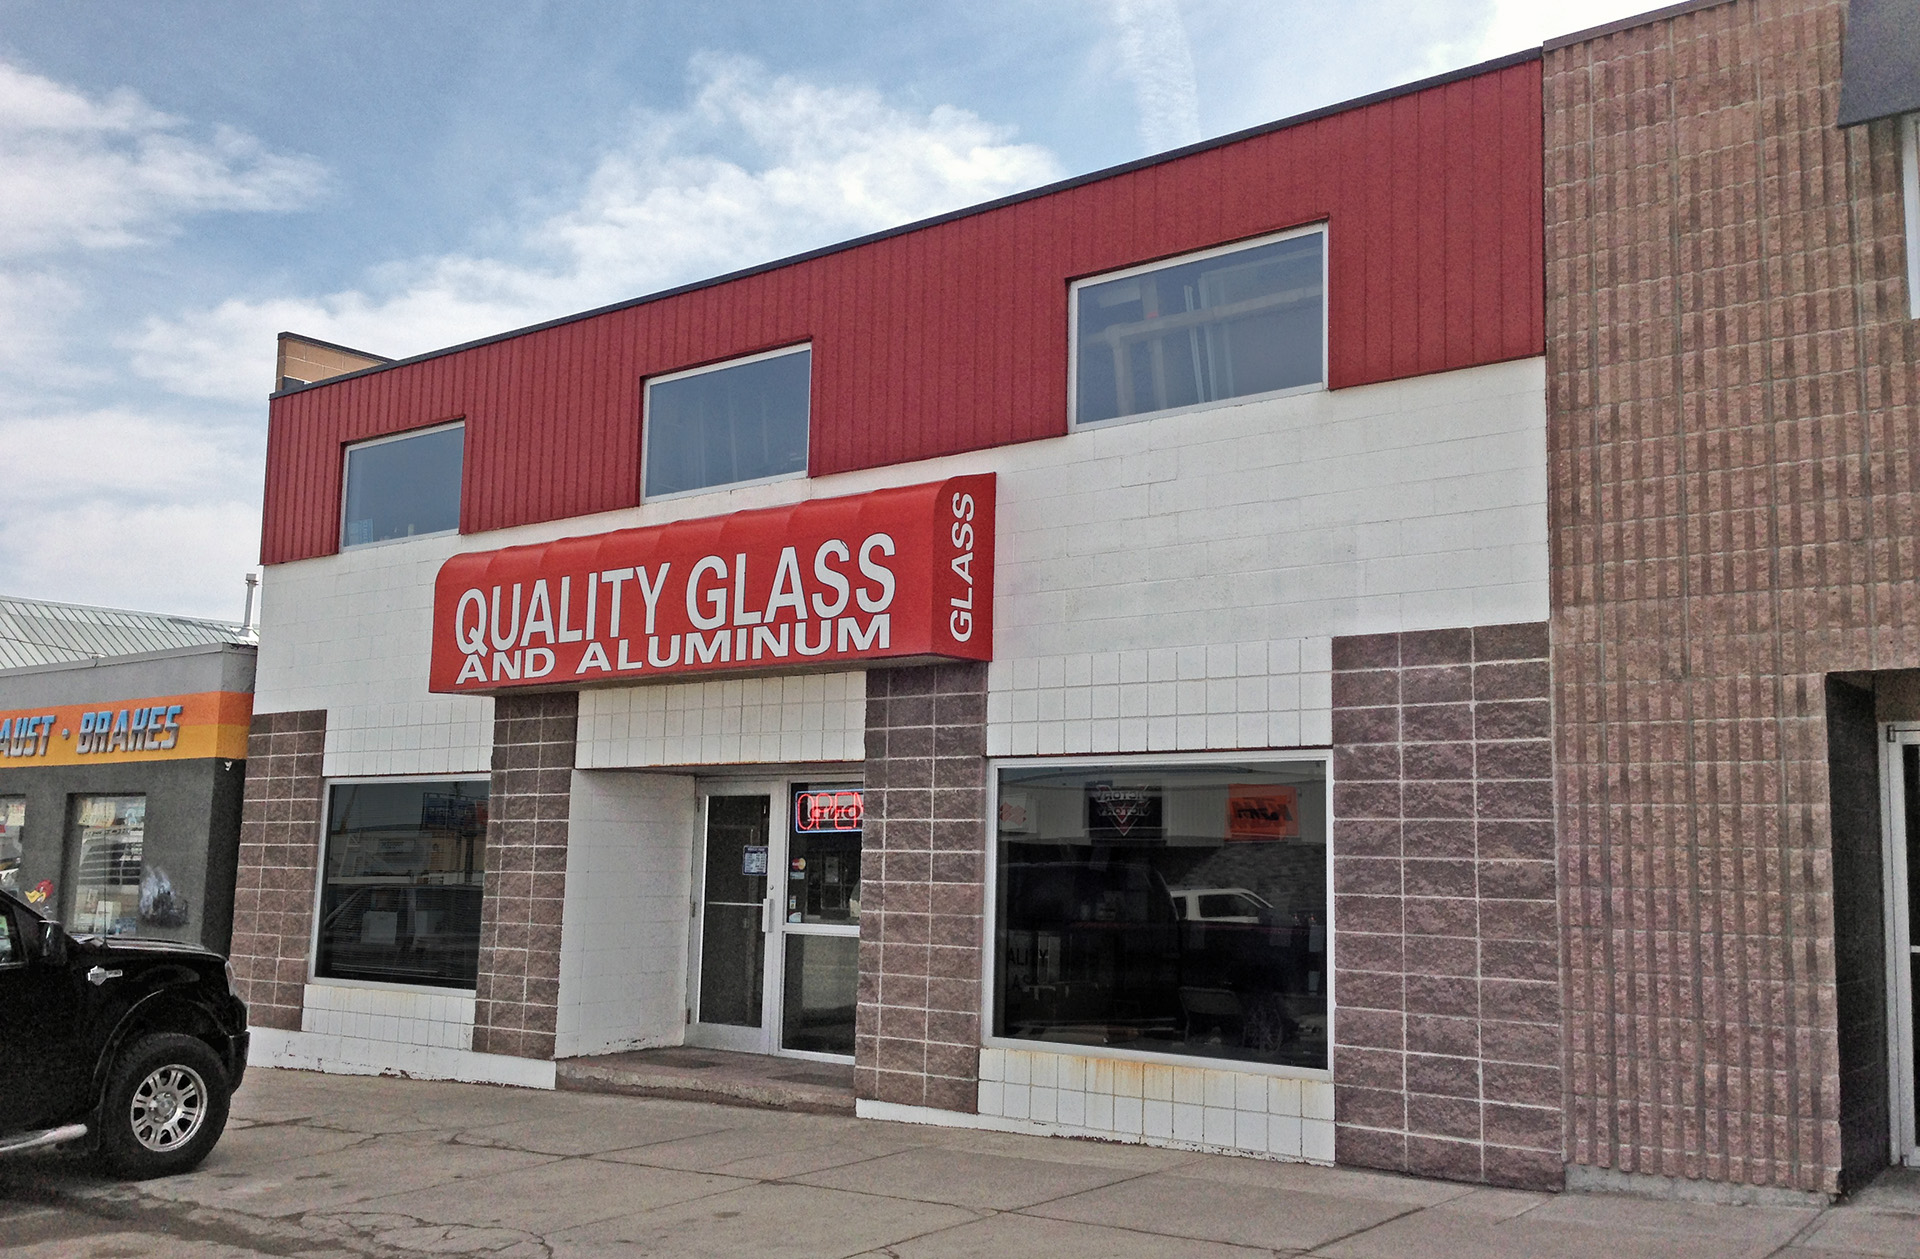 Exterior of Quality Glass and Aluminum building 